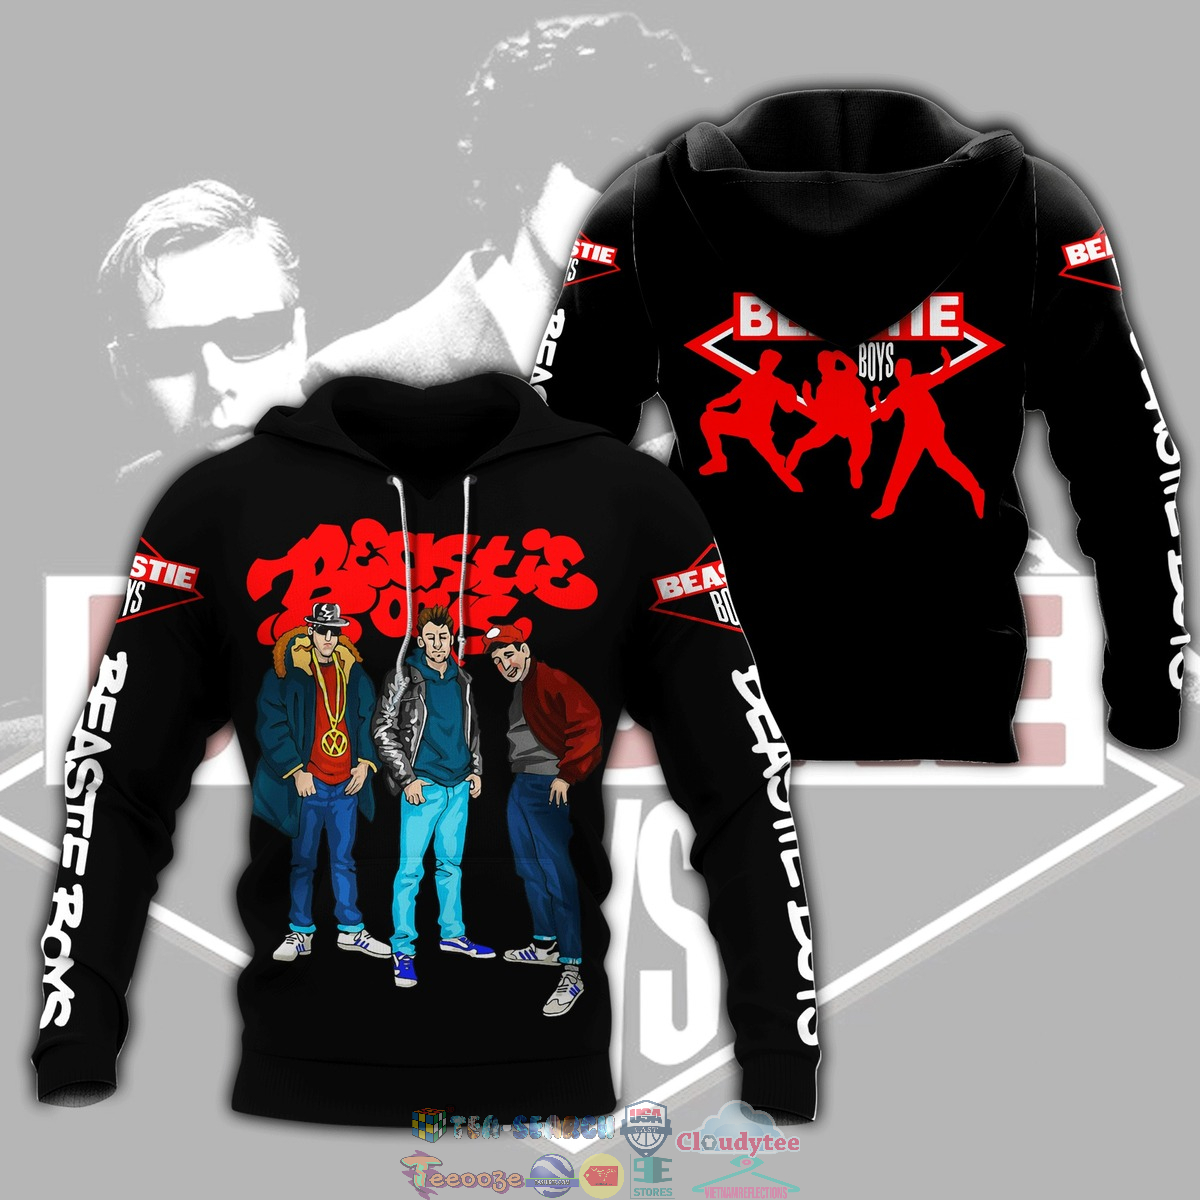 Beastie Boys Band ver 2 3D hoodie and t-shirt – Saleoff